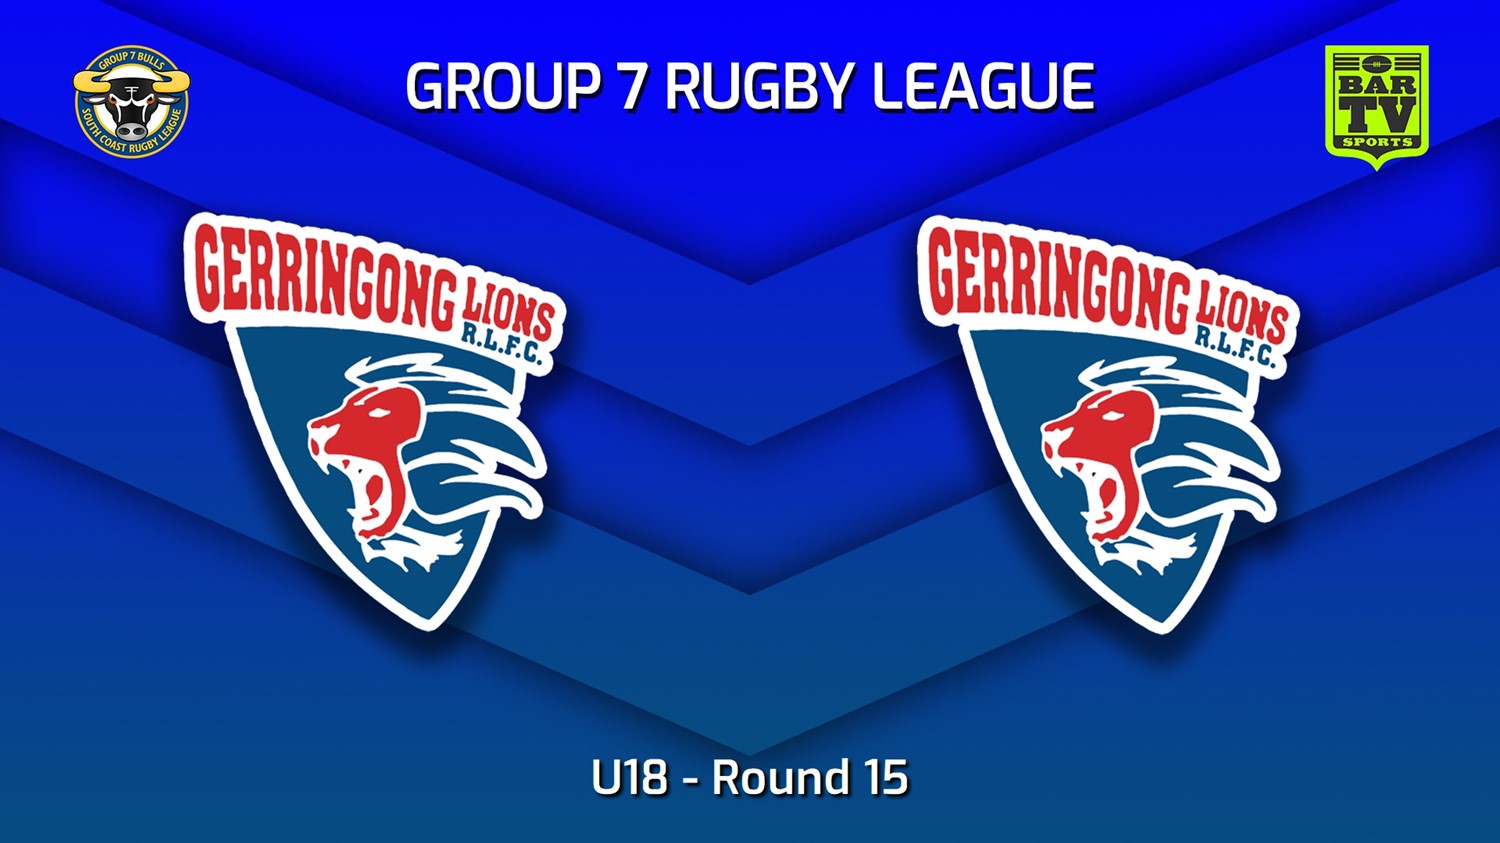 220806-South Coast Round 15 - U18 - Gerringong Lions v Gerringong Lions Slate Image